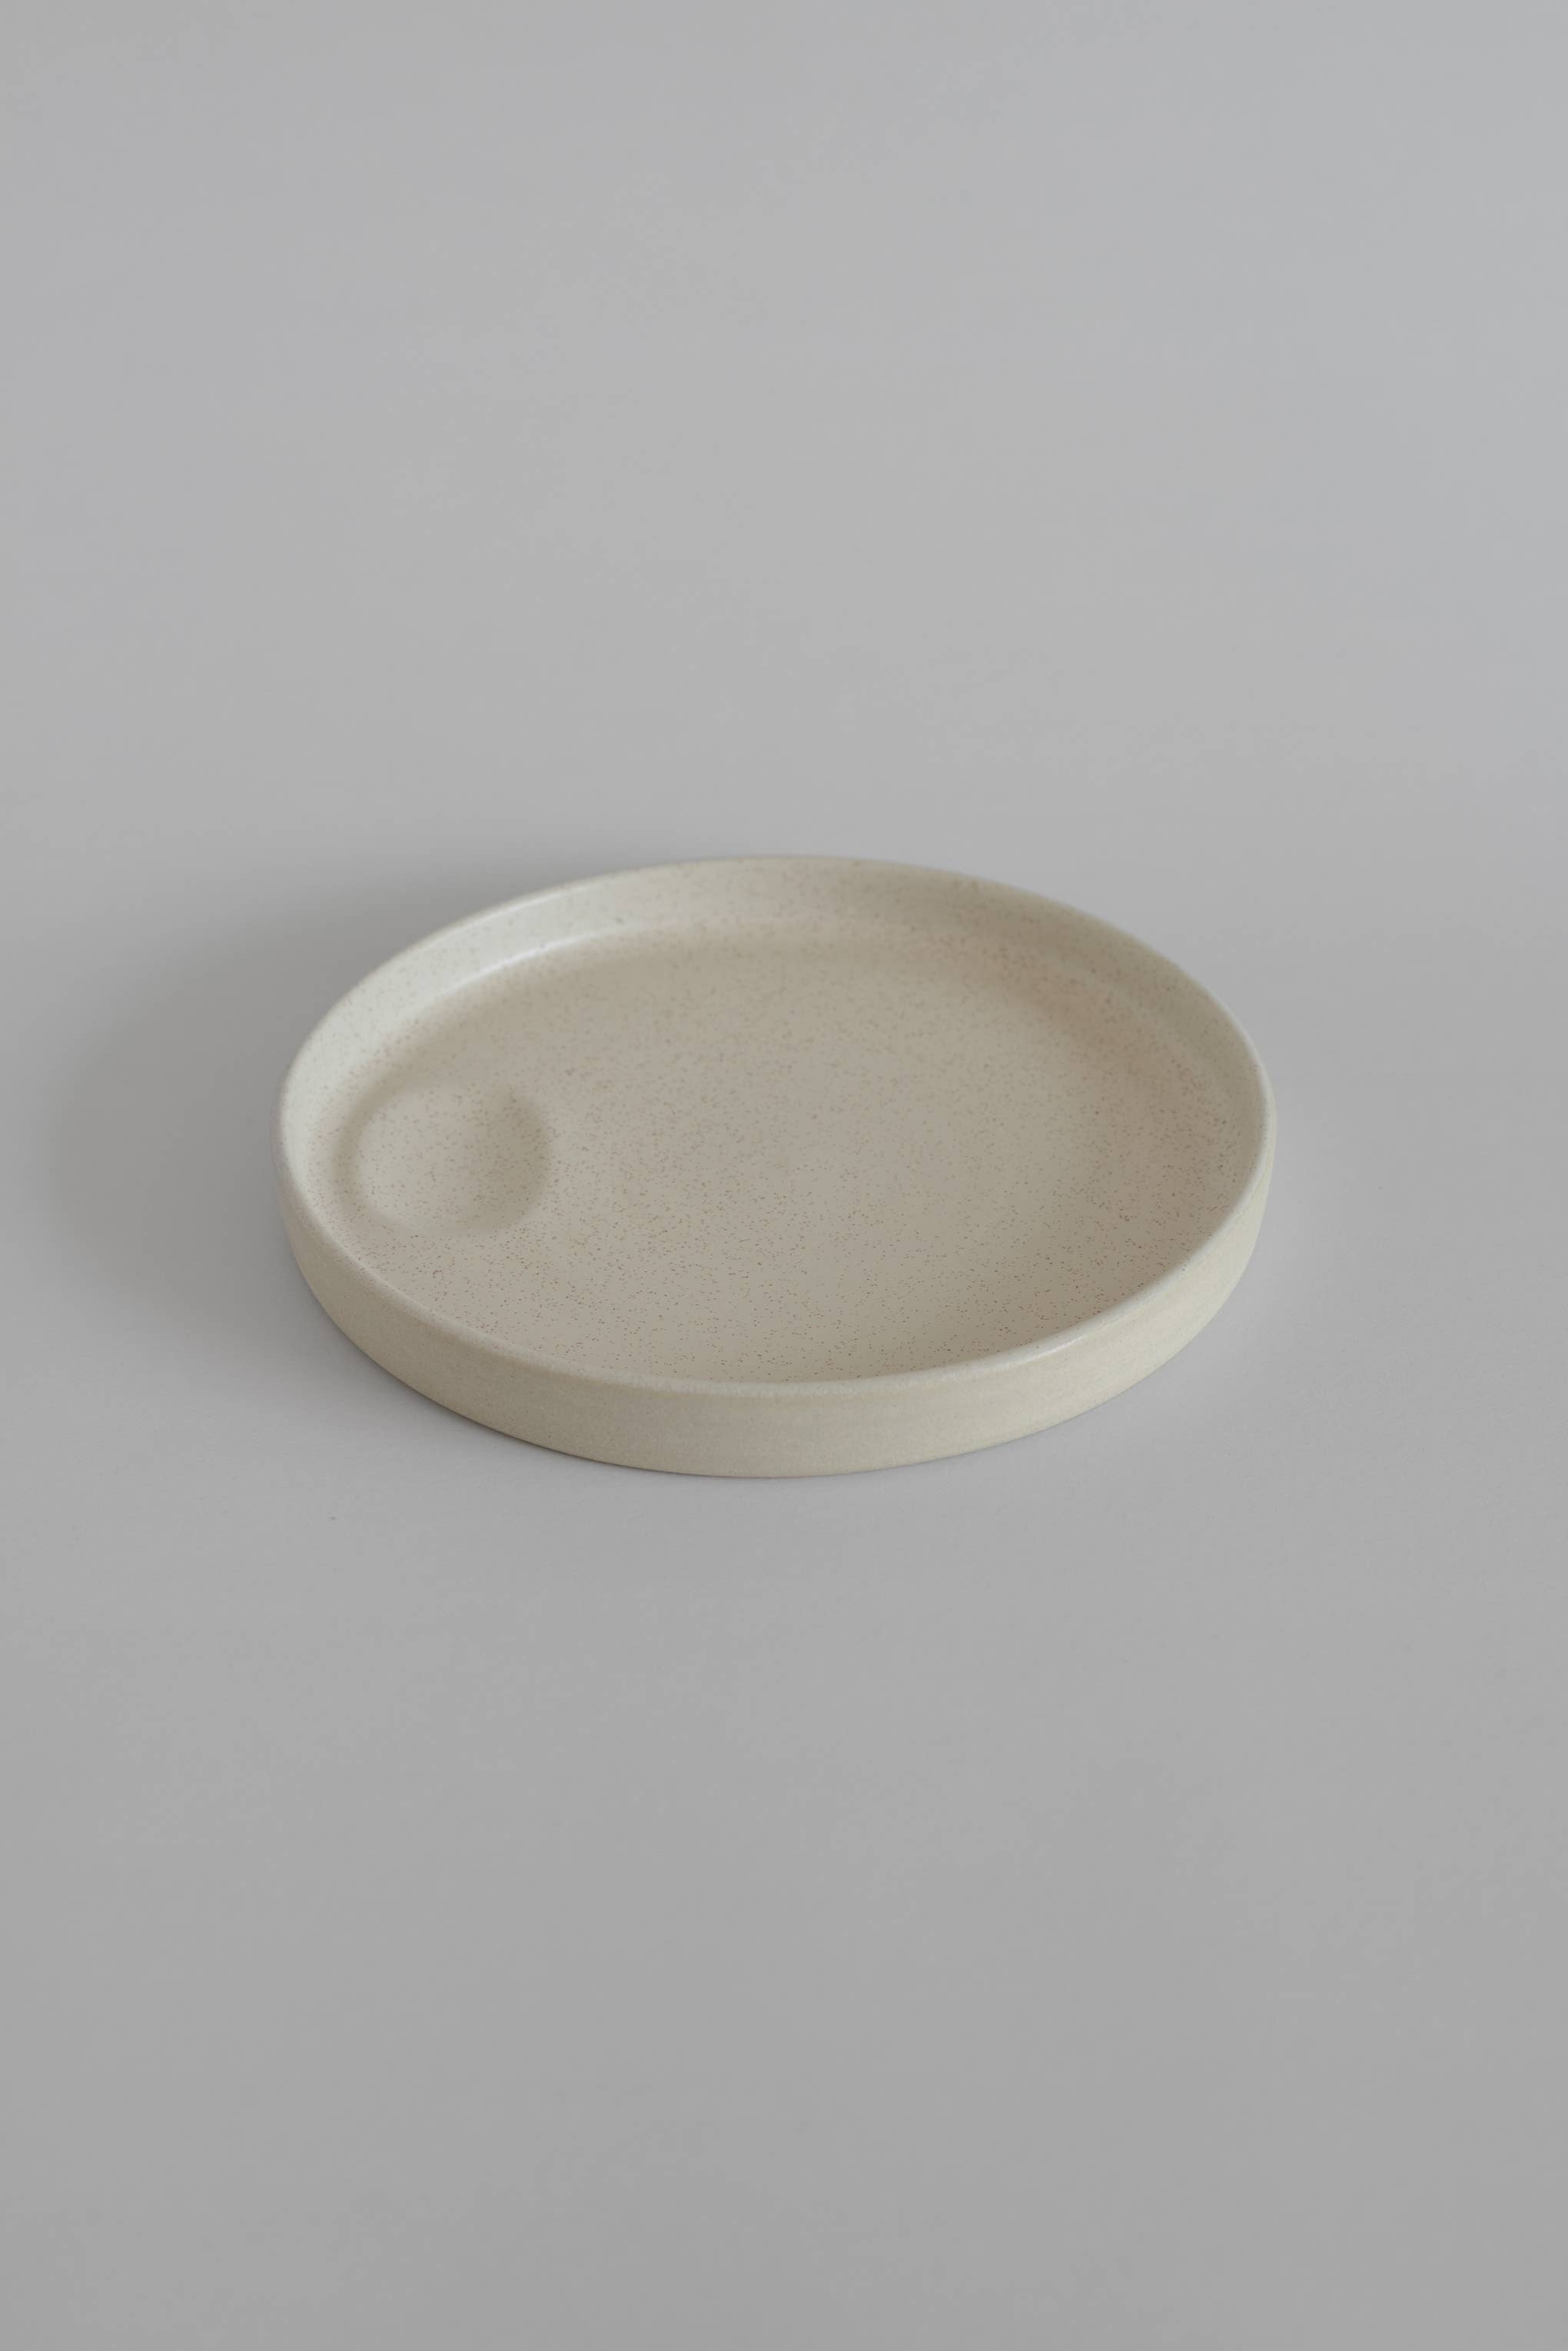 Bord Cream 20 cm - Handgemaakt keramisch dessertbord - Pasen